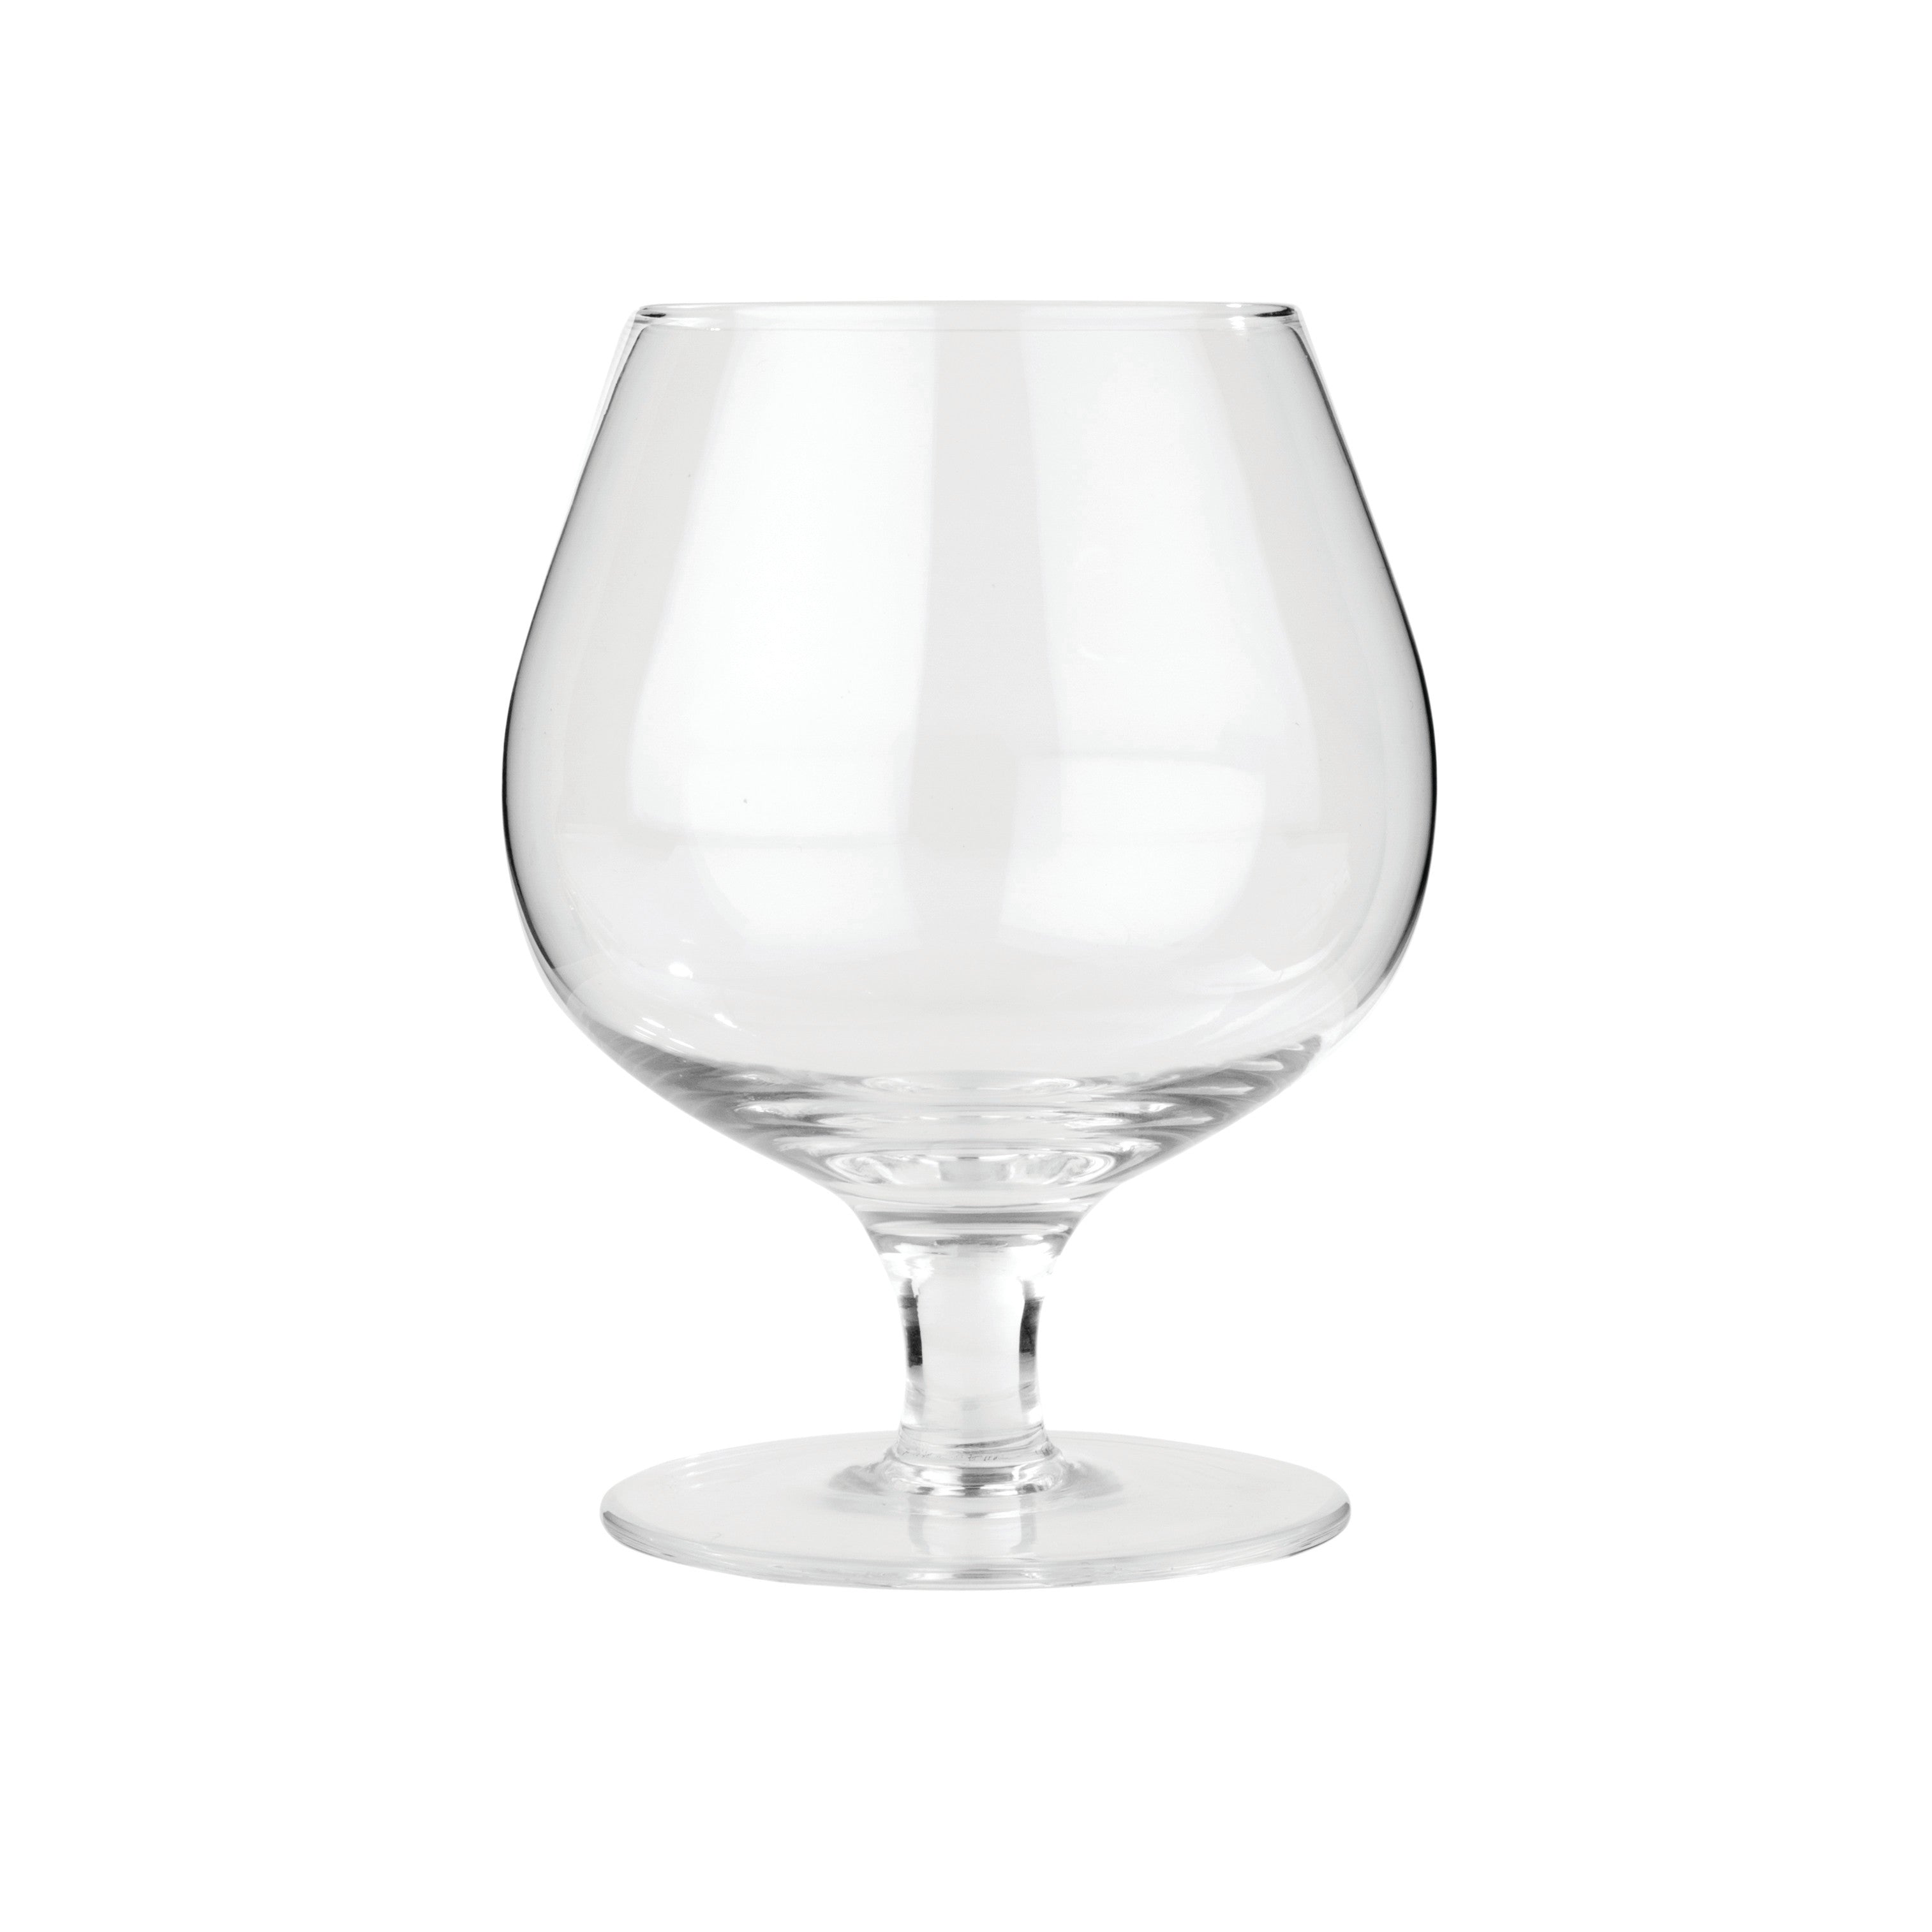 CRYSTAL BRANDY GLASSES BEAUTIFUL PINWHEEL PATTERN TOTAL 4 GLASSES